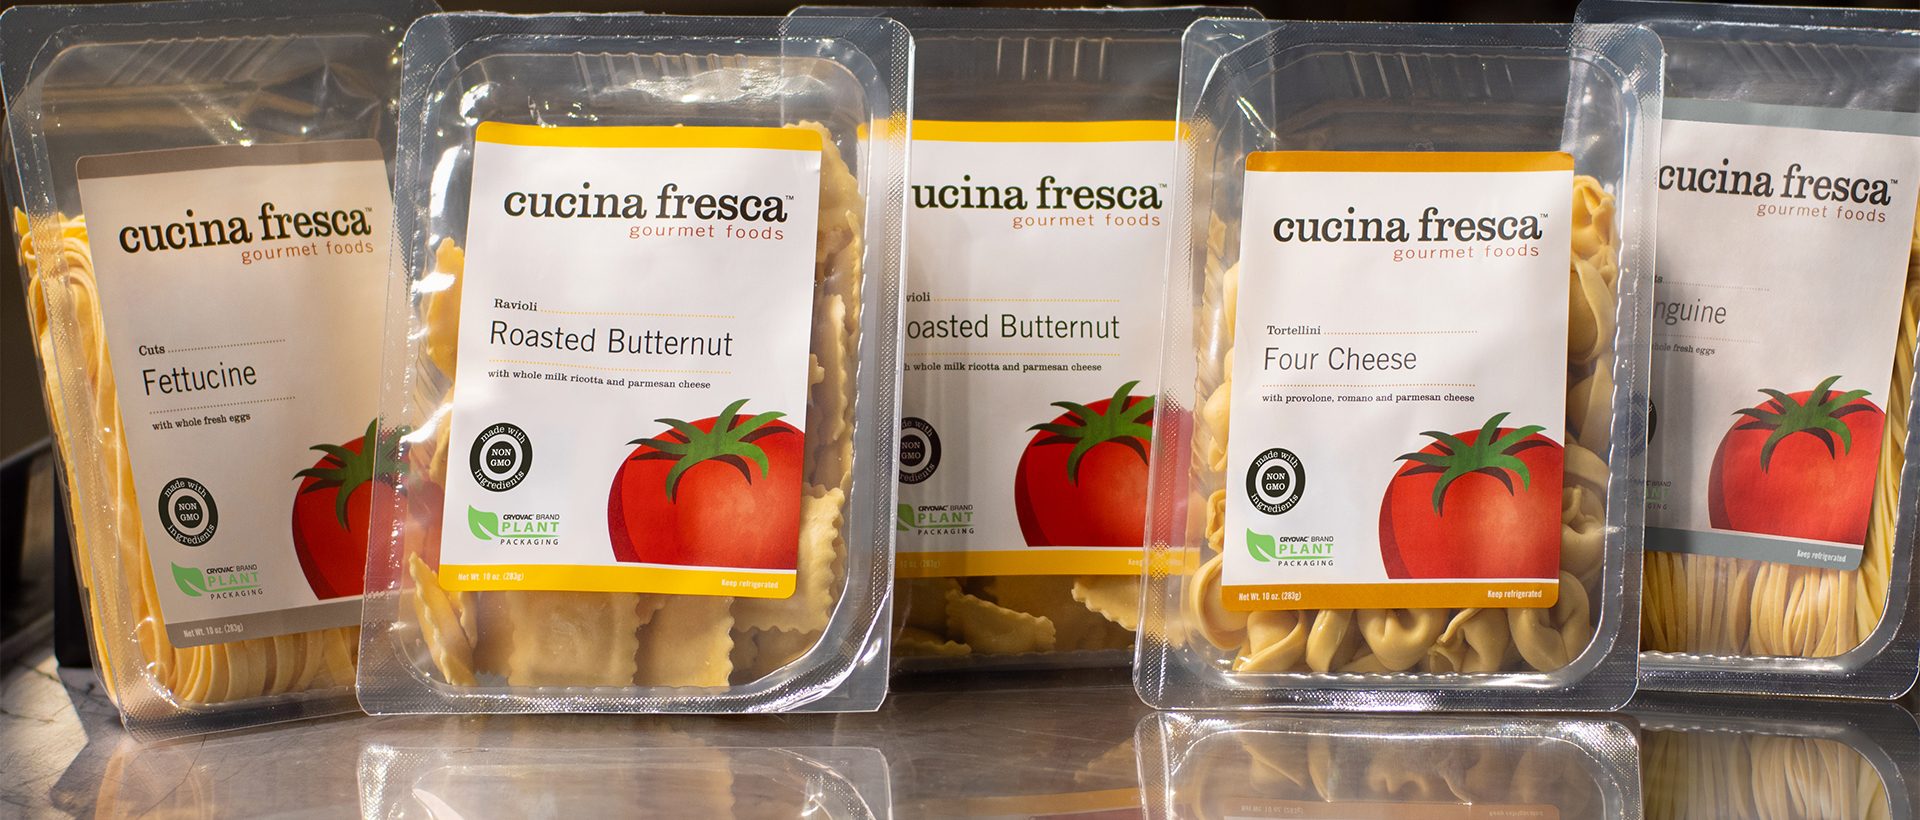 cucina fresca pasta packaging